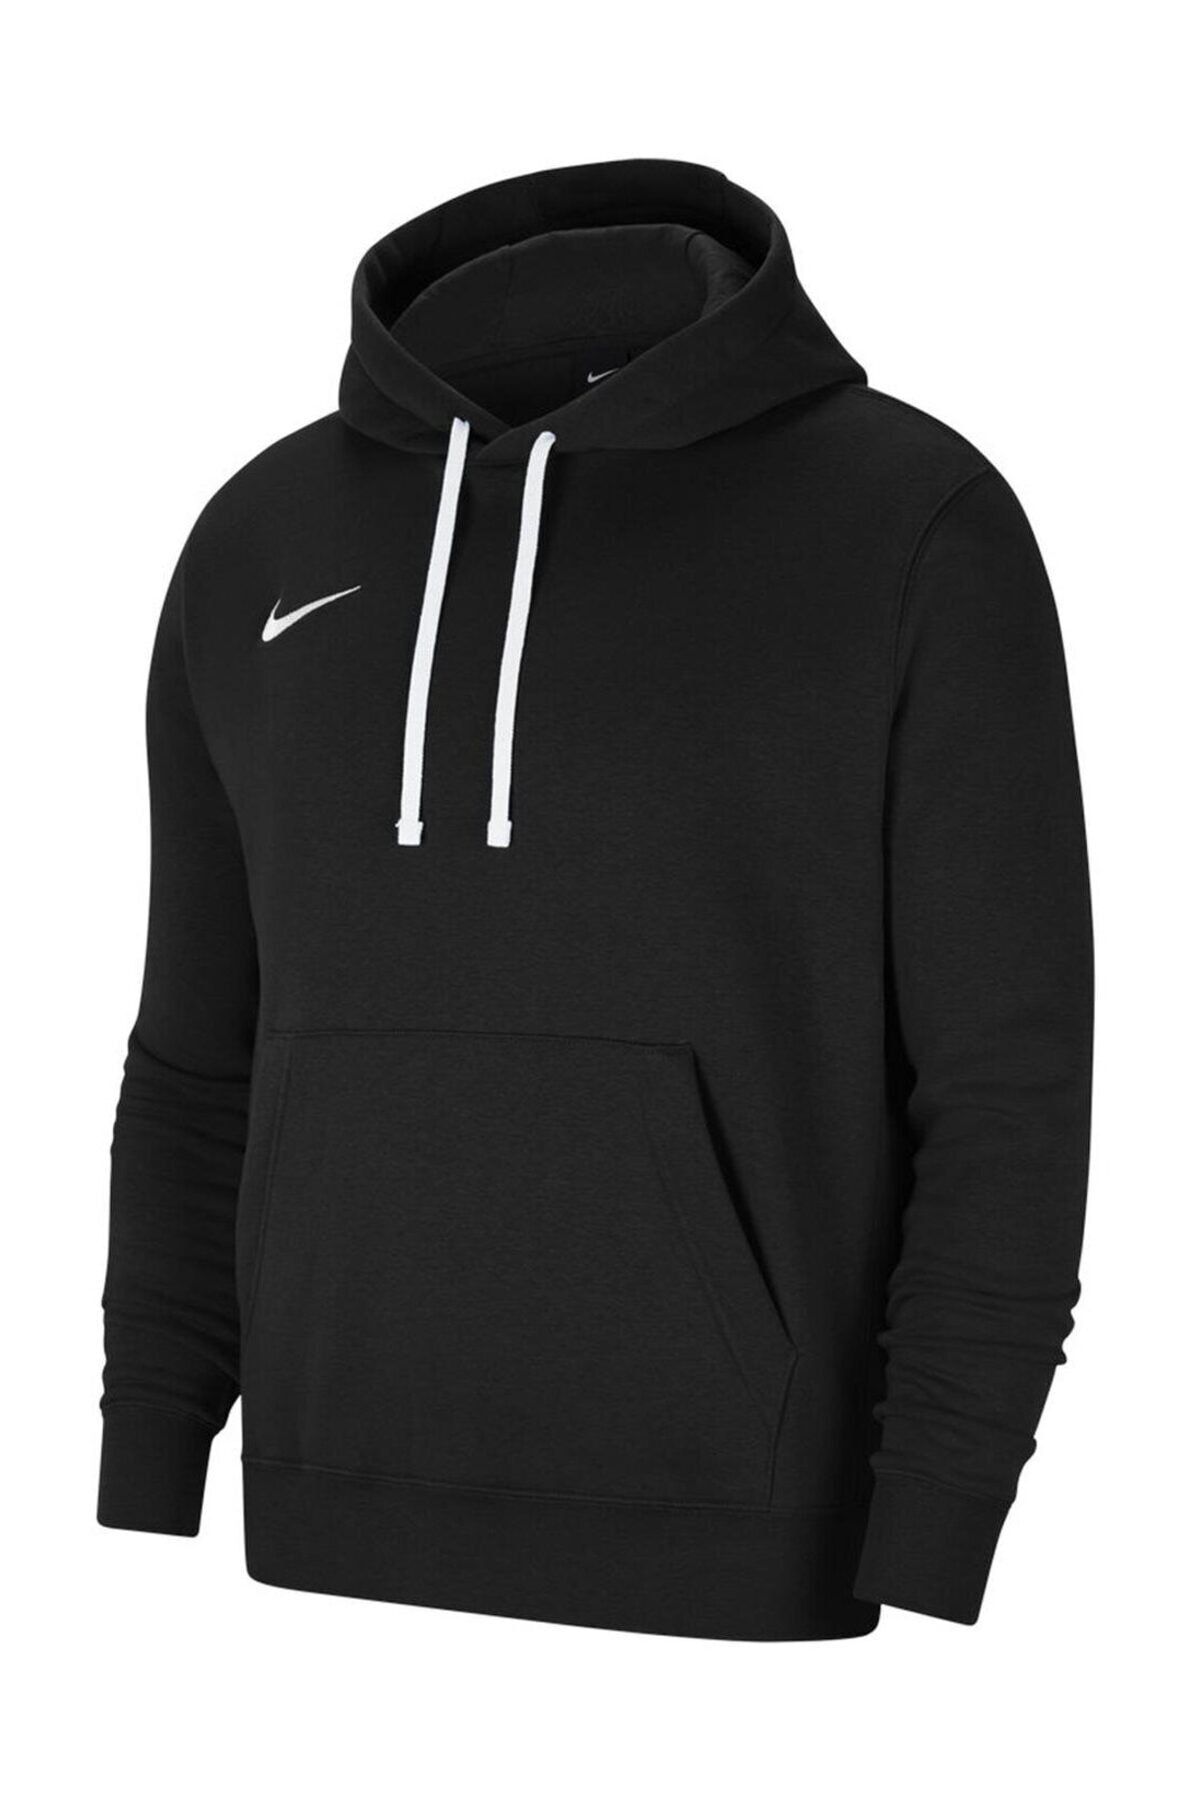 سوشرت نایک کلاهدار مردانه مشکی سیاه هودی پارک Nike